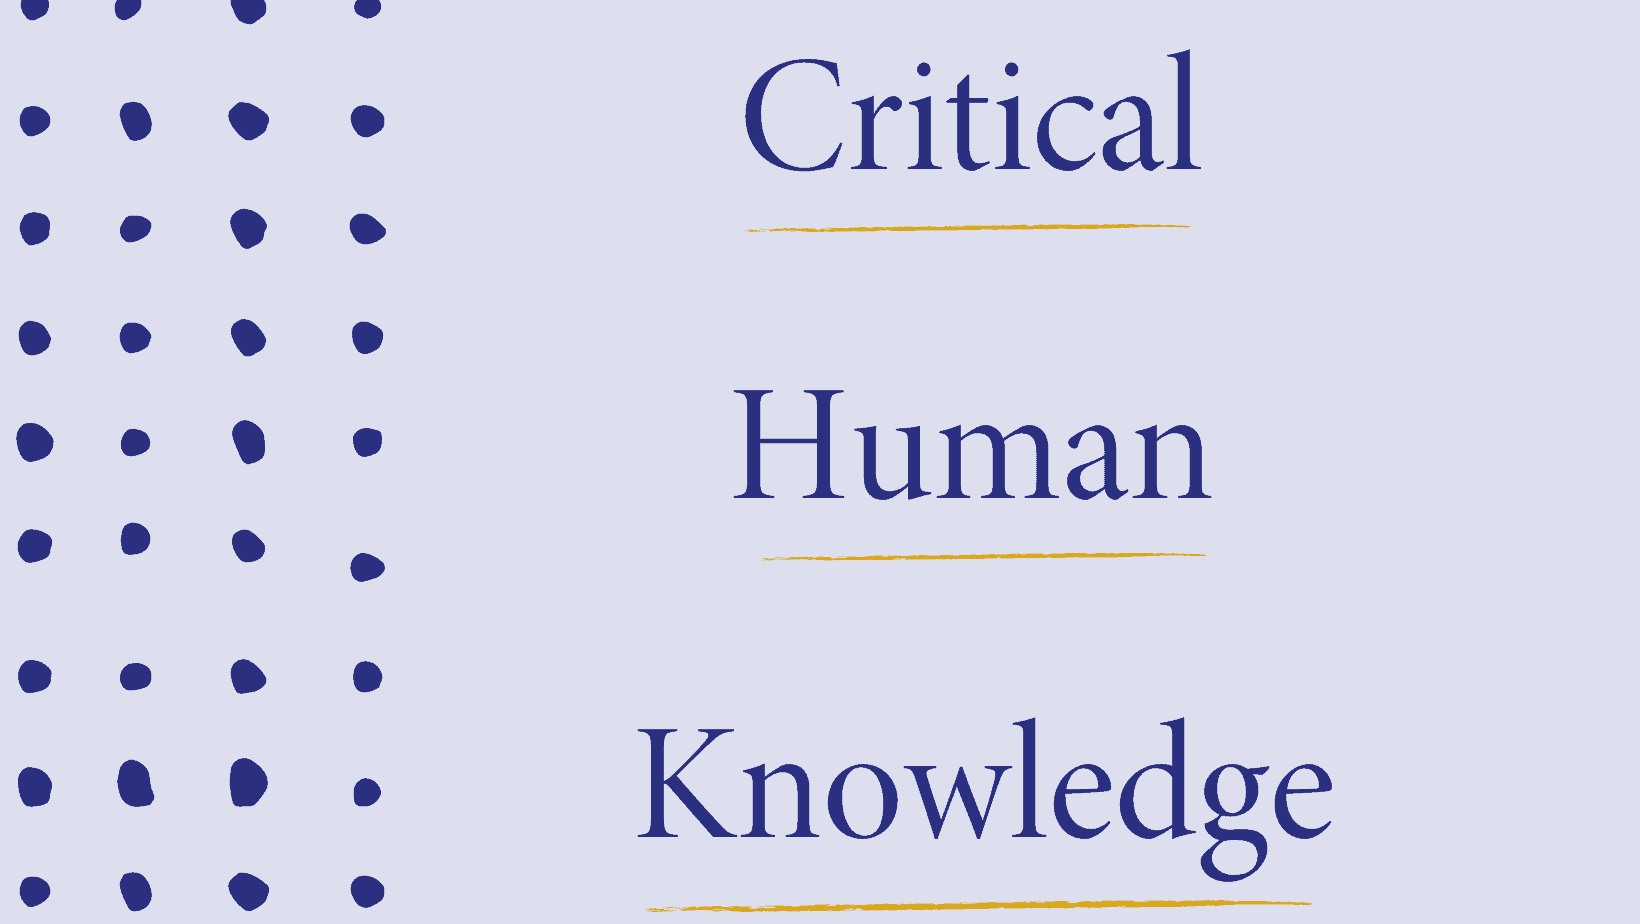 Critical Human Knowledge